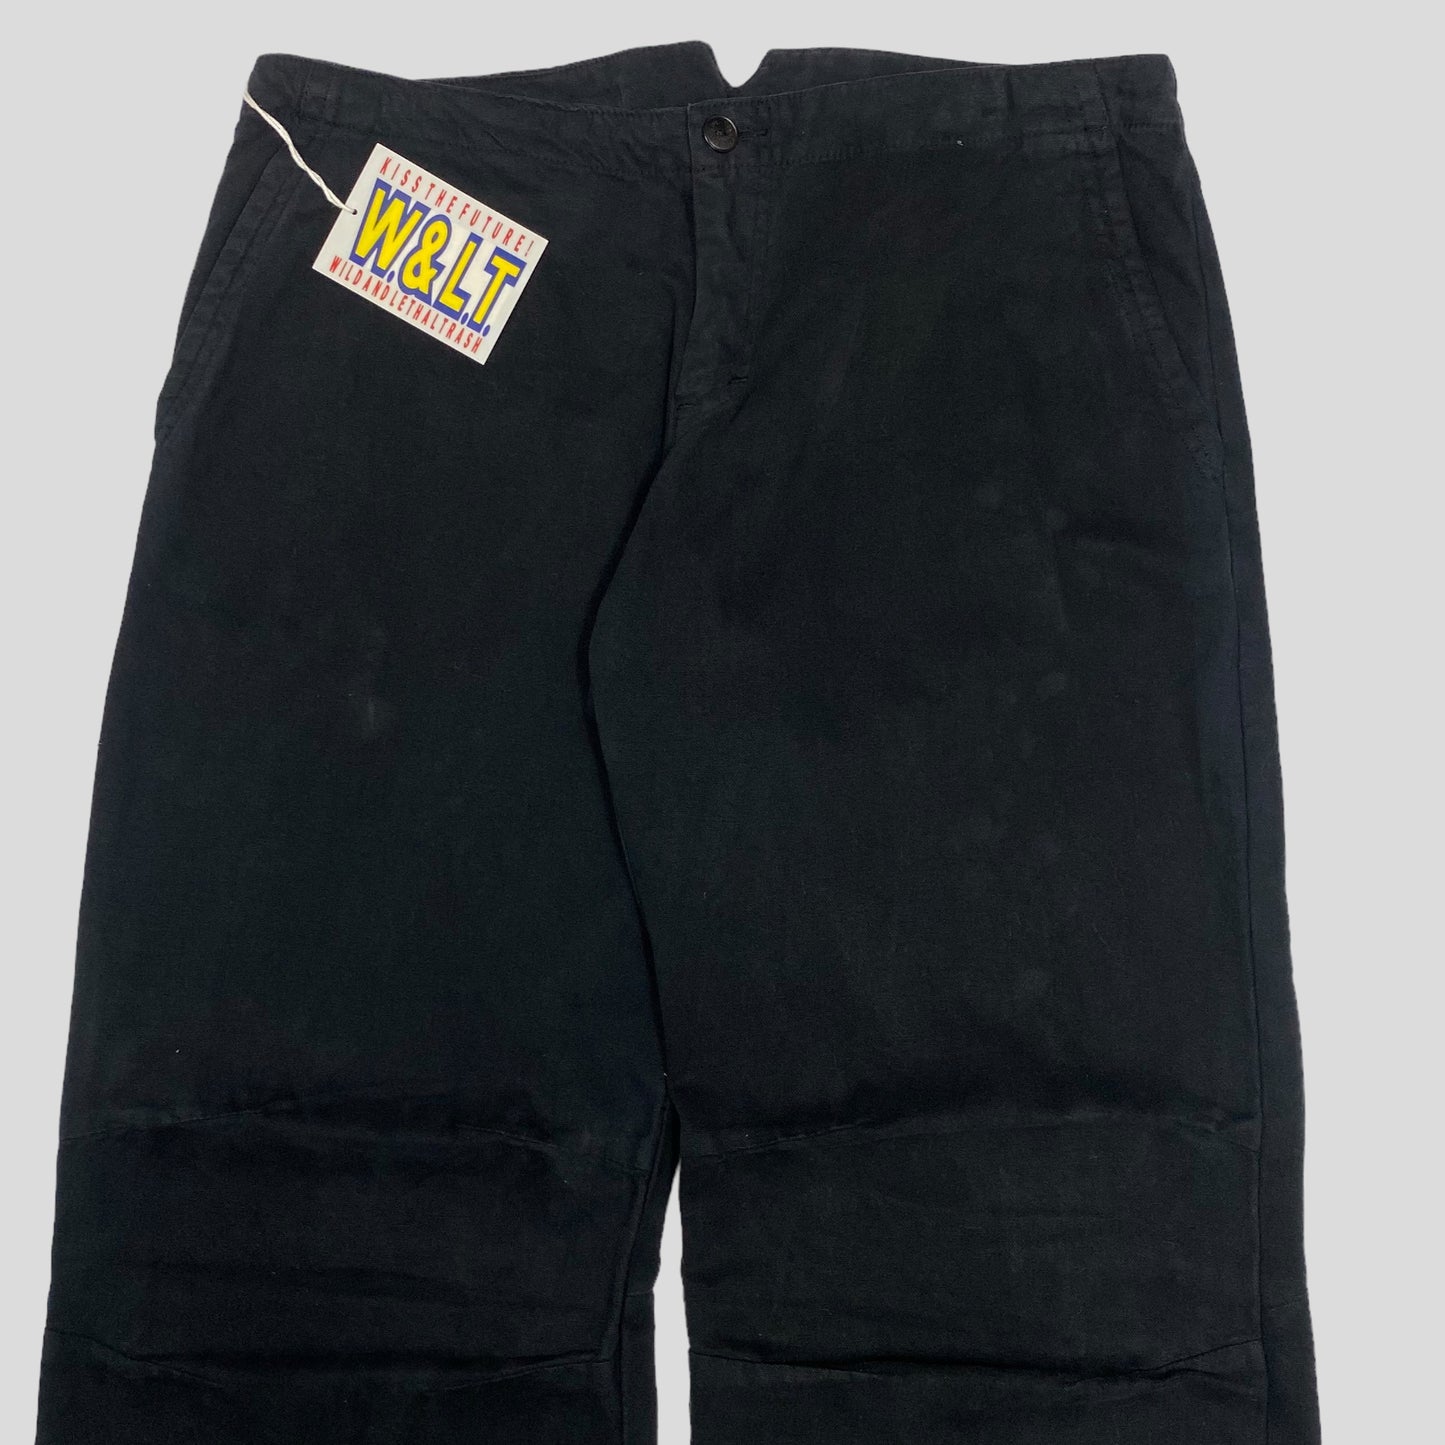 W+LT 2003 Baggy Puk Puk Trousers - 32-33